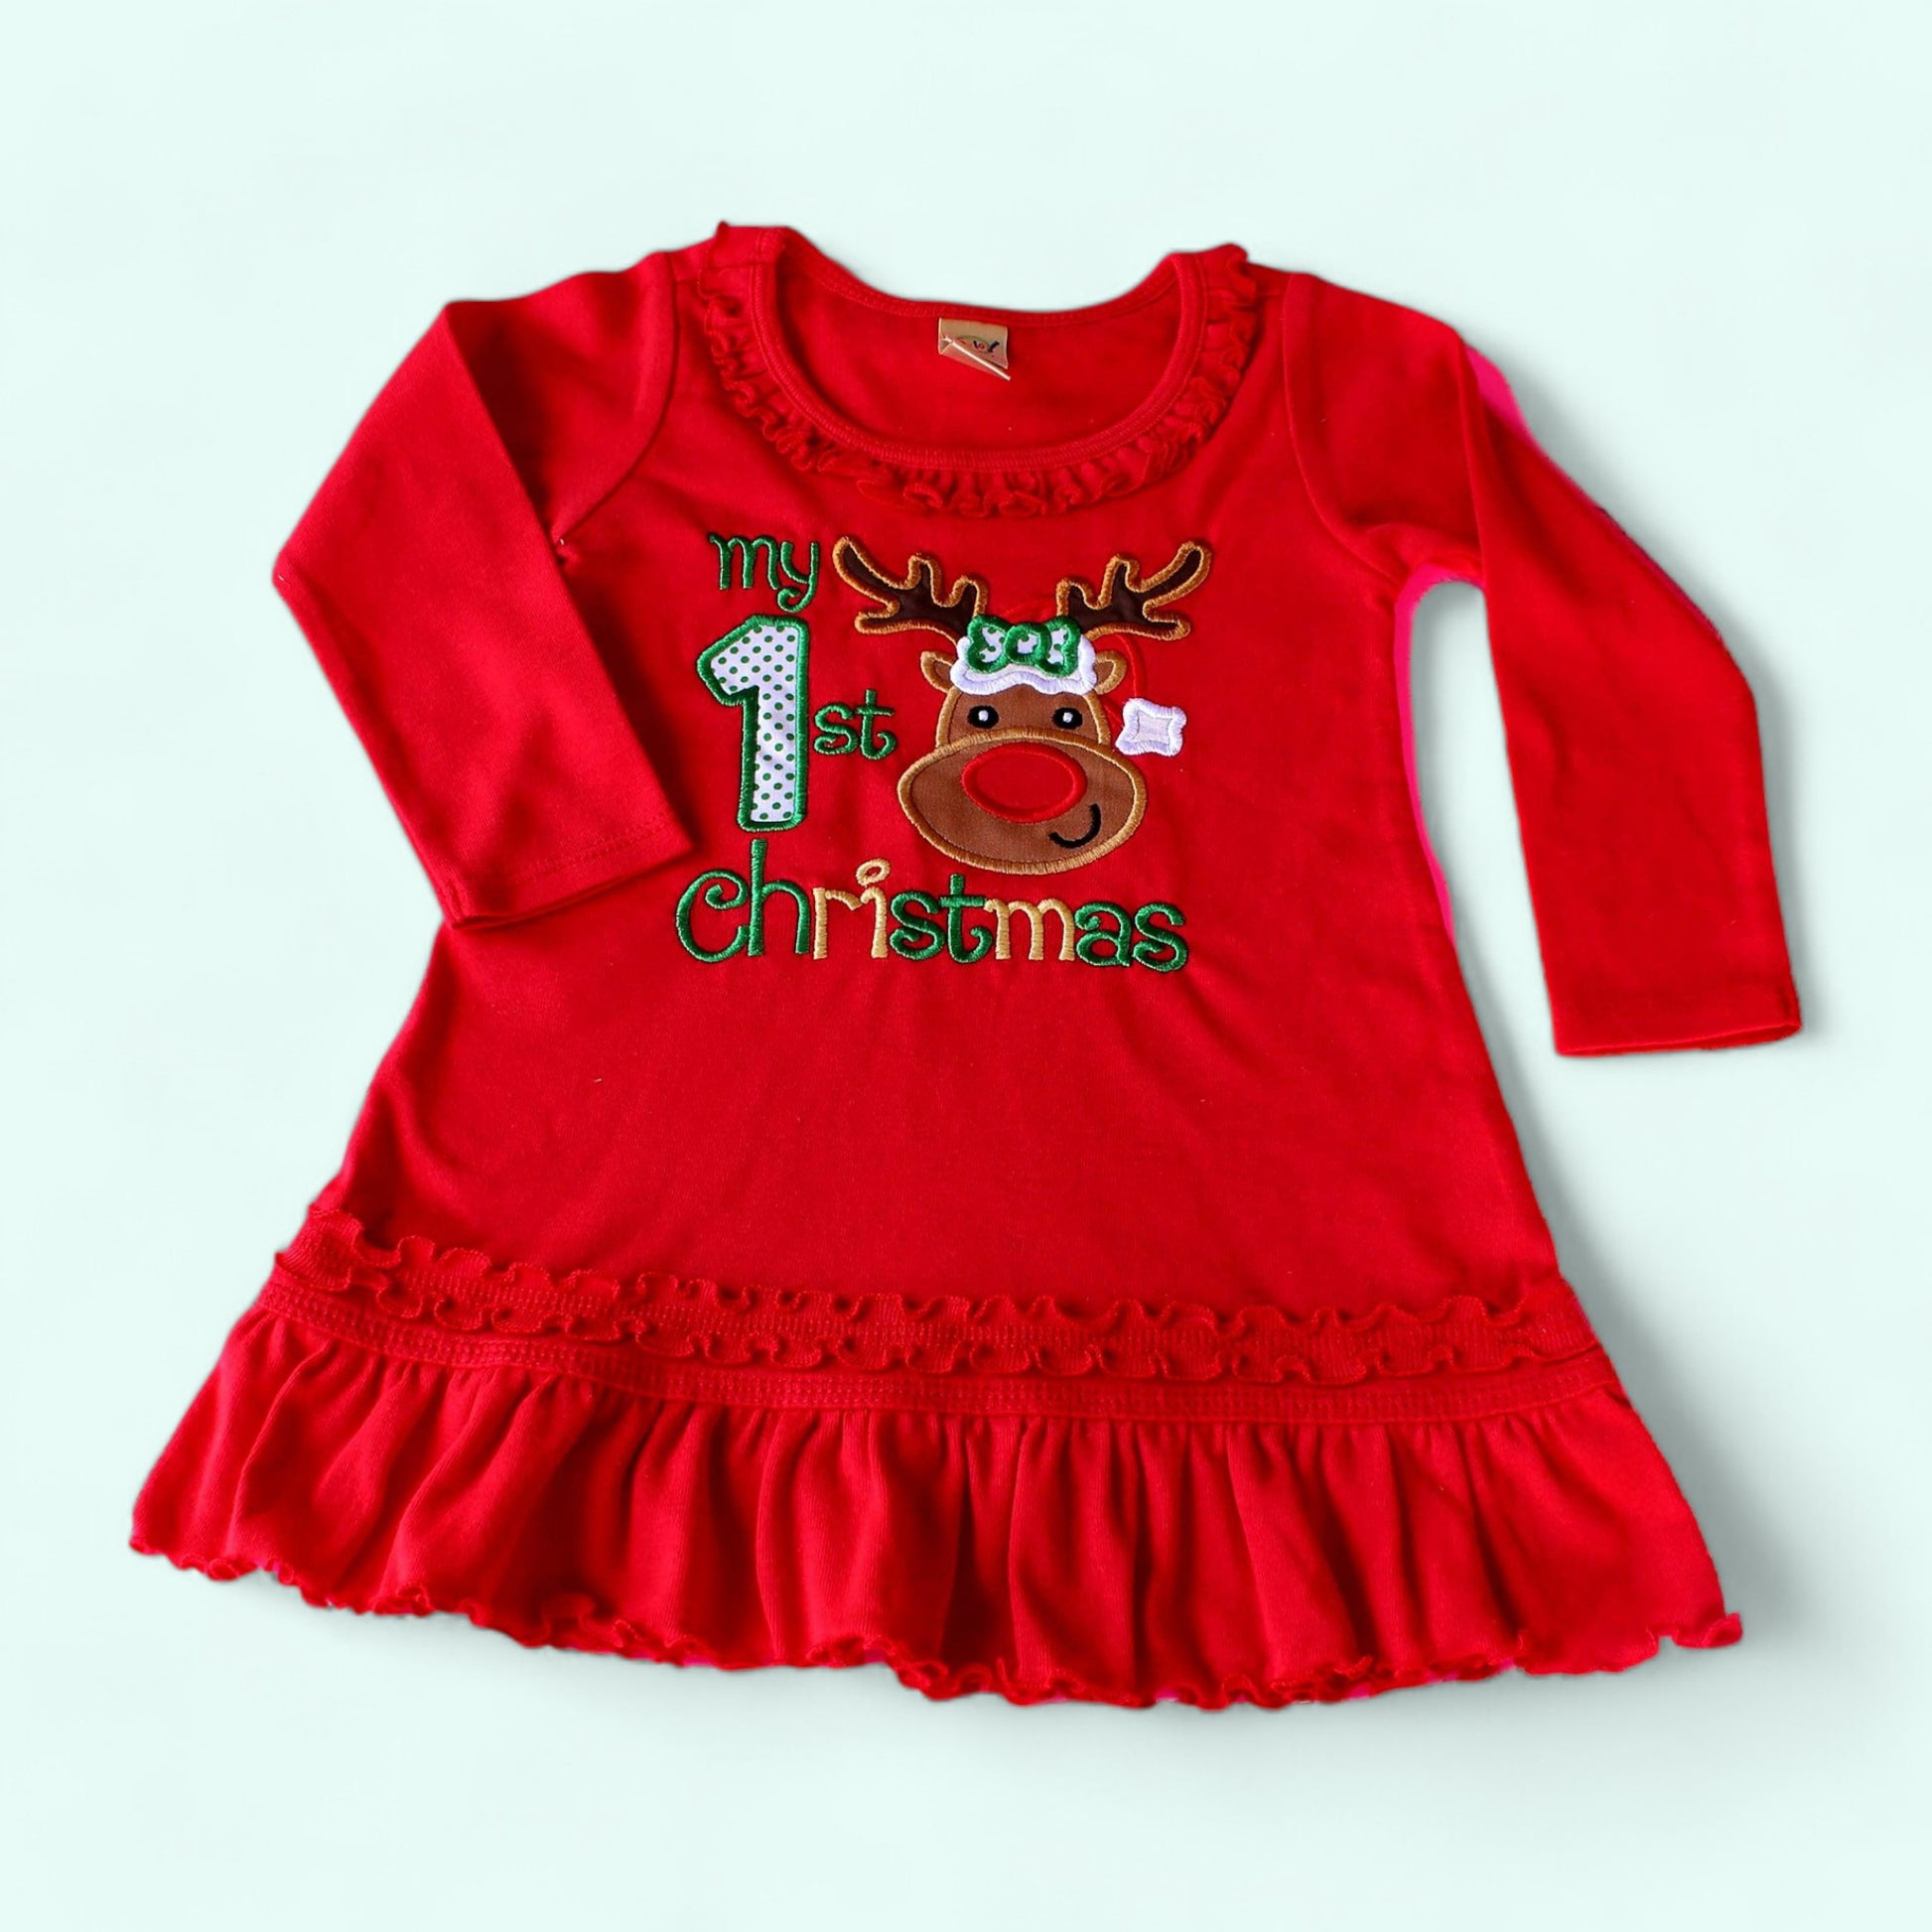 Red Christmas dress for girls